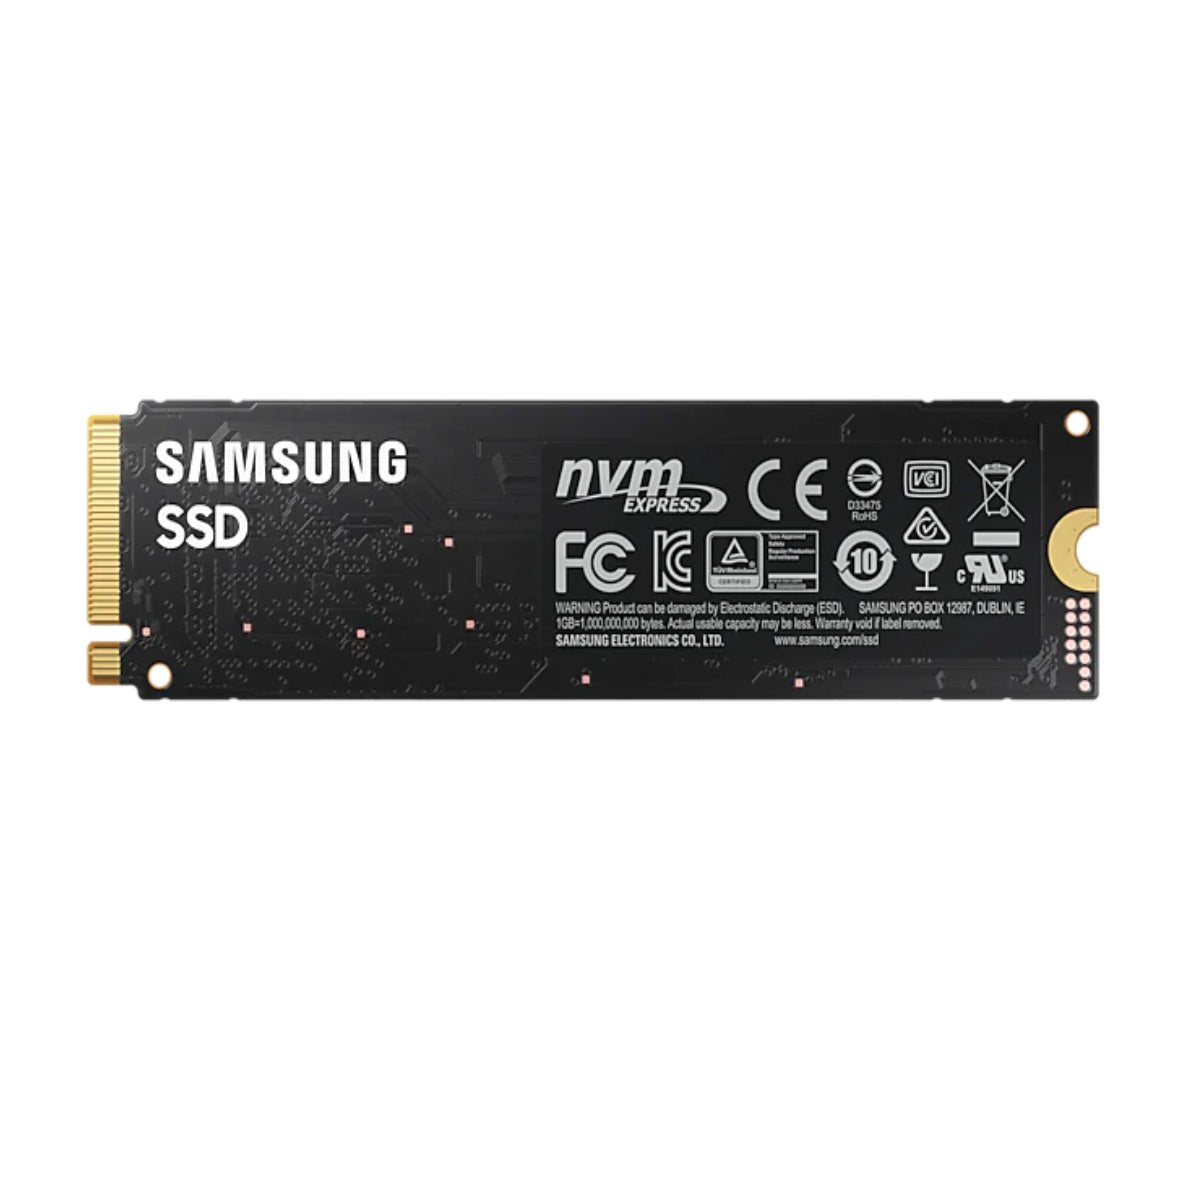 Samsung 980 250GB PCIe 3.0 NVMe M.2 SSD - Store 974 | ستور ٩٧٤